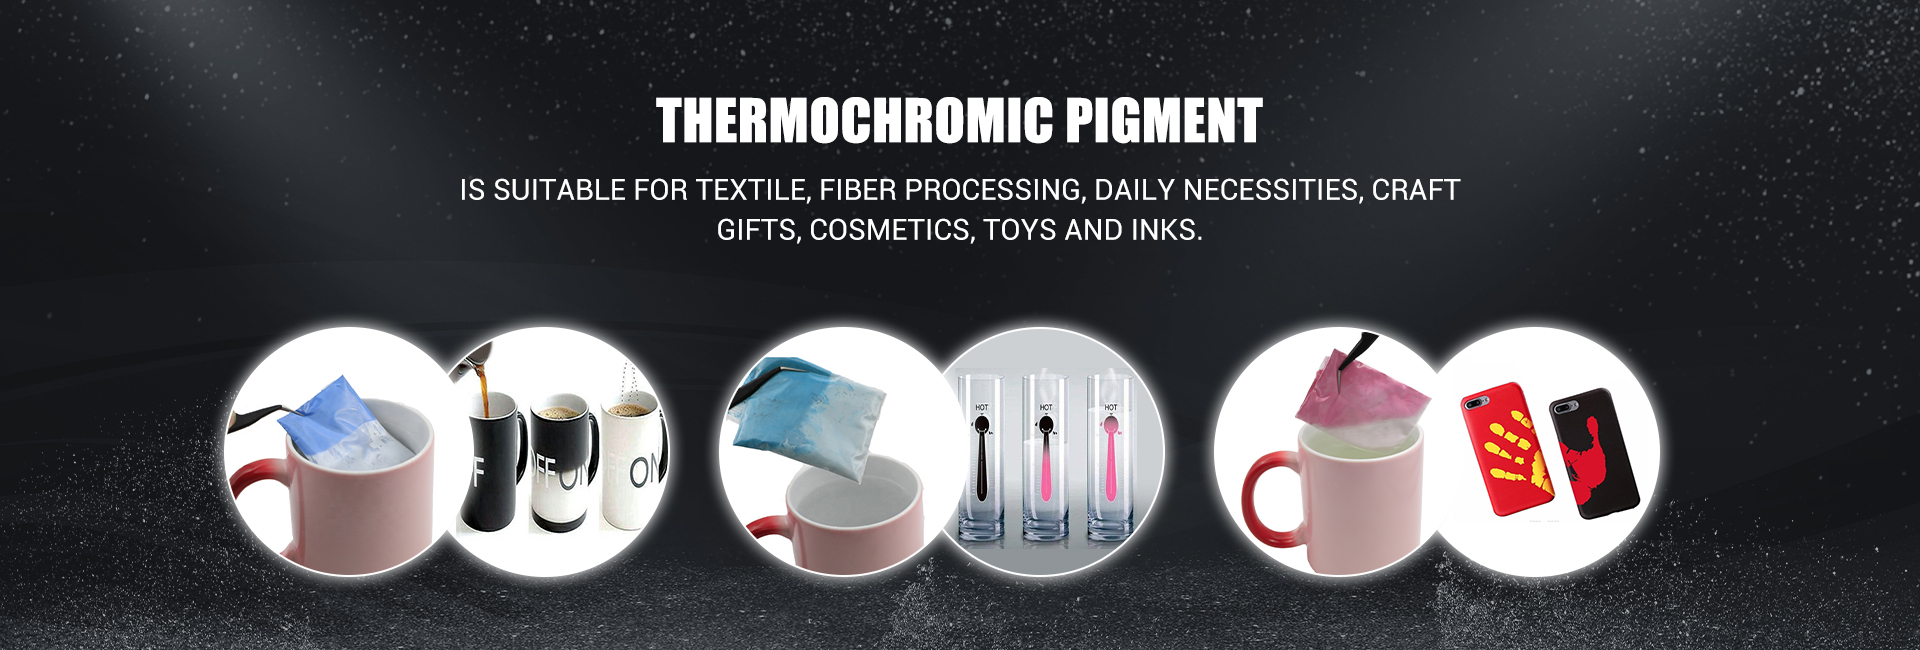 thermochromic pigment